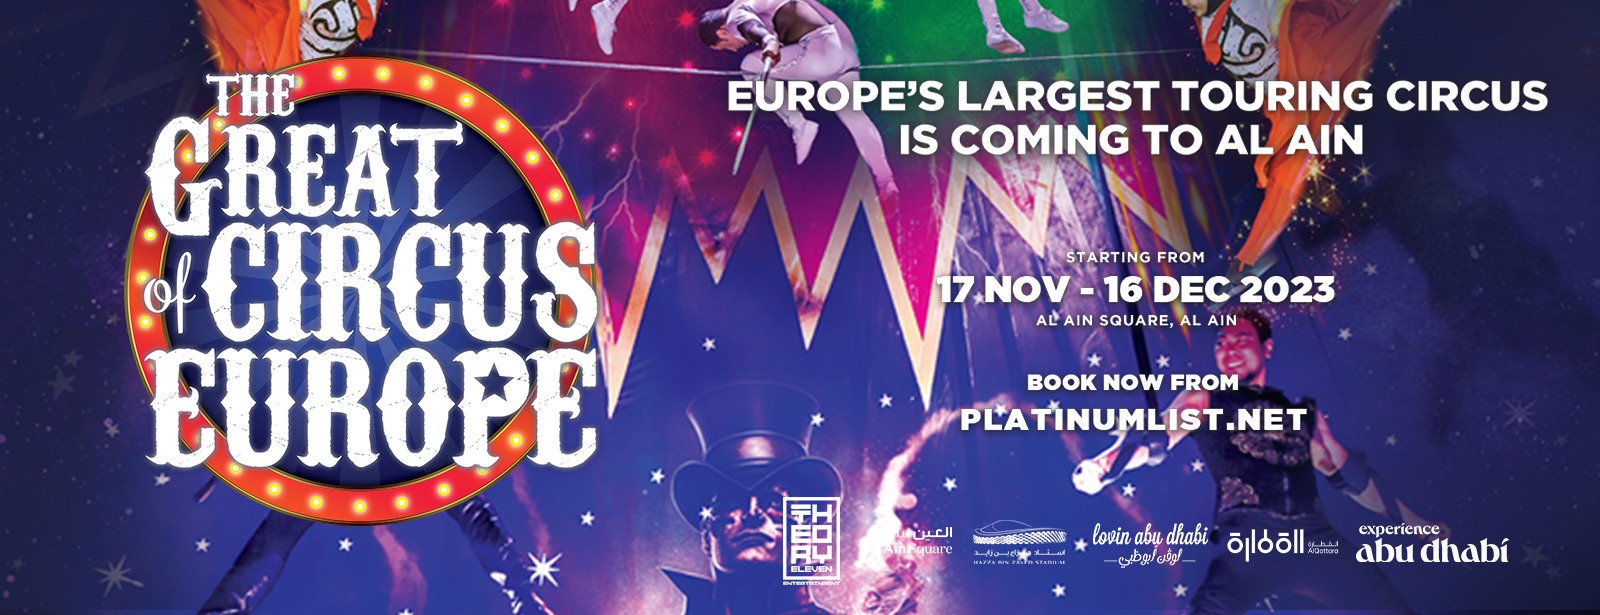 The Great Circus of Europe in Al Ain - Coming Soon in UAE